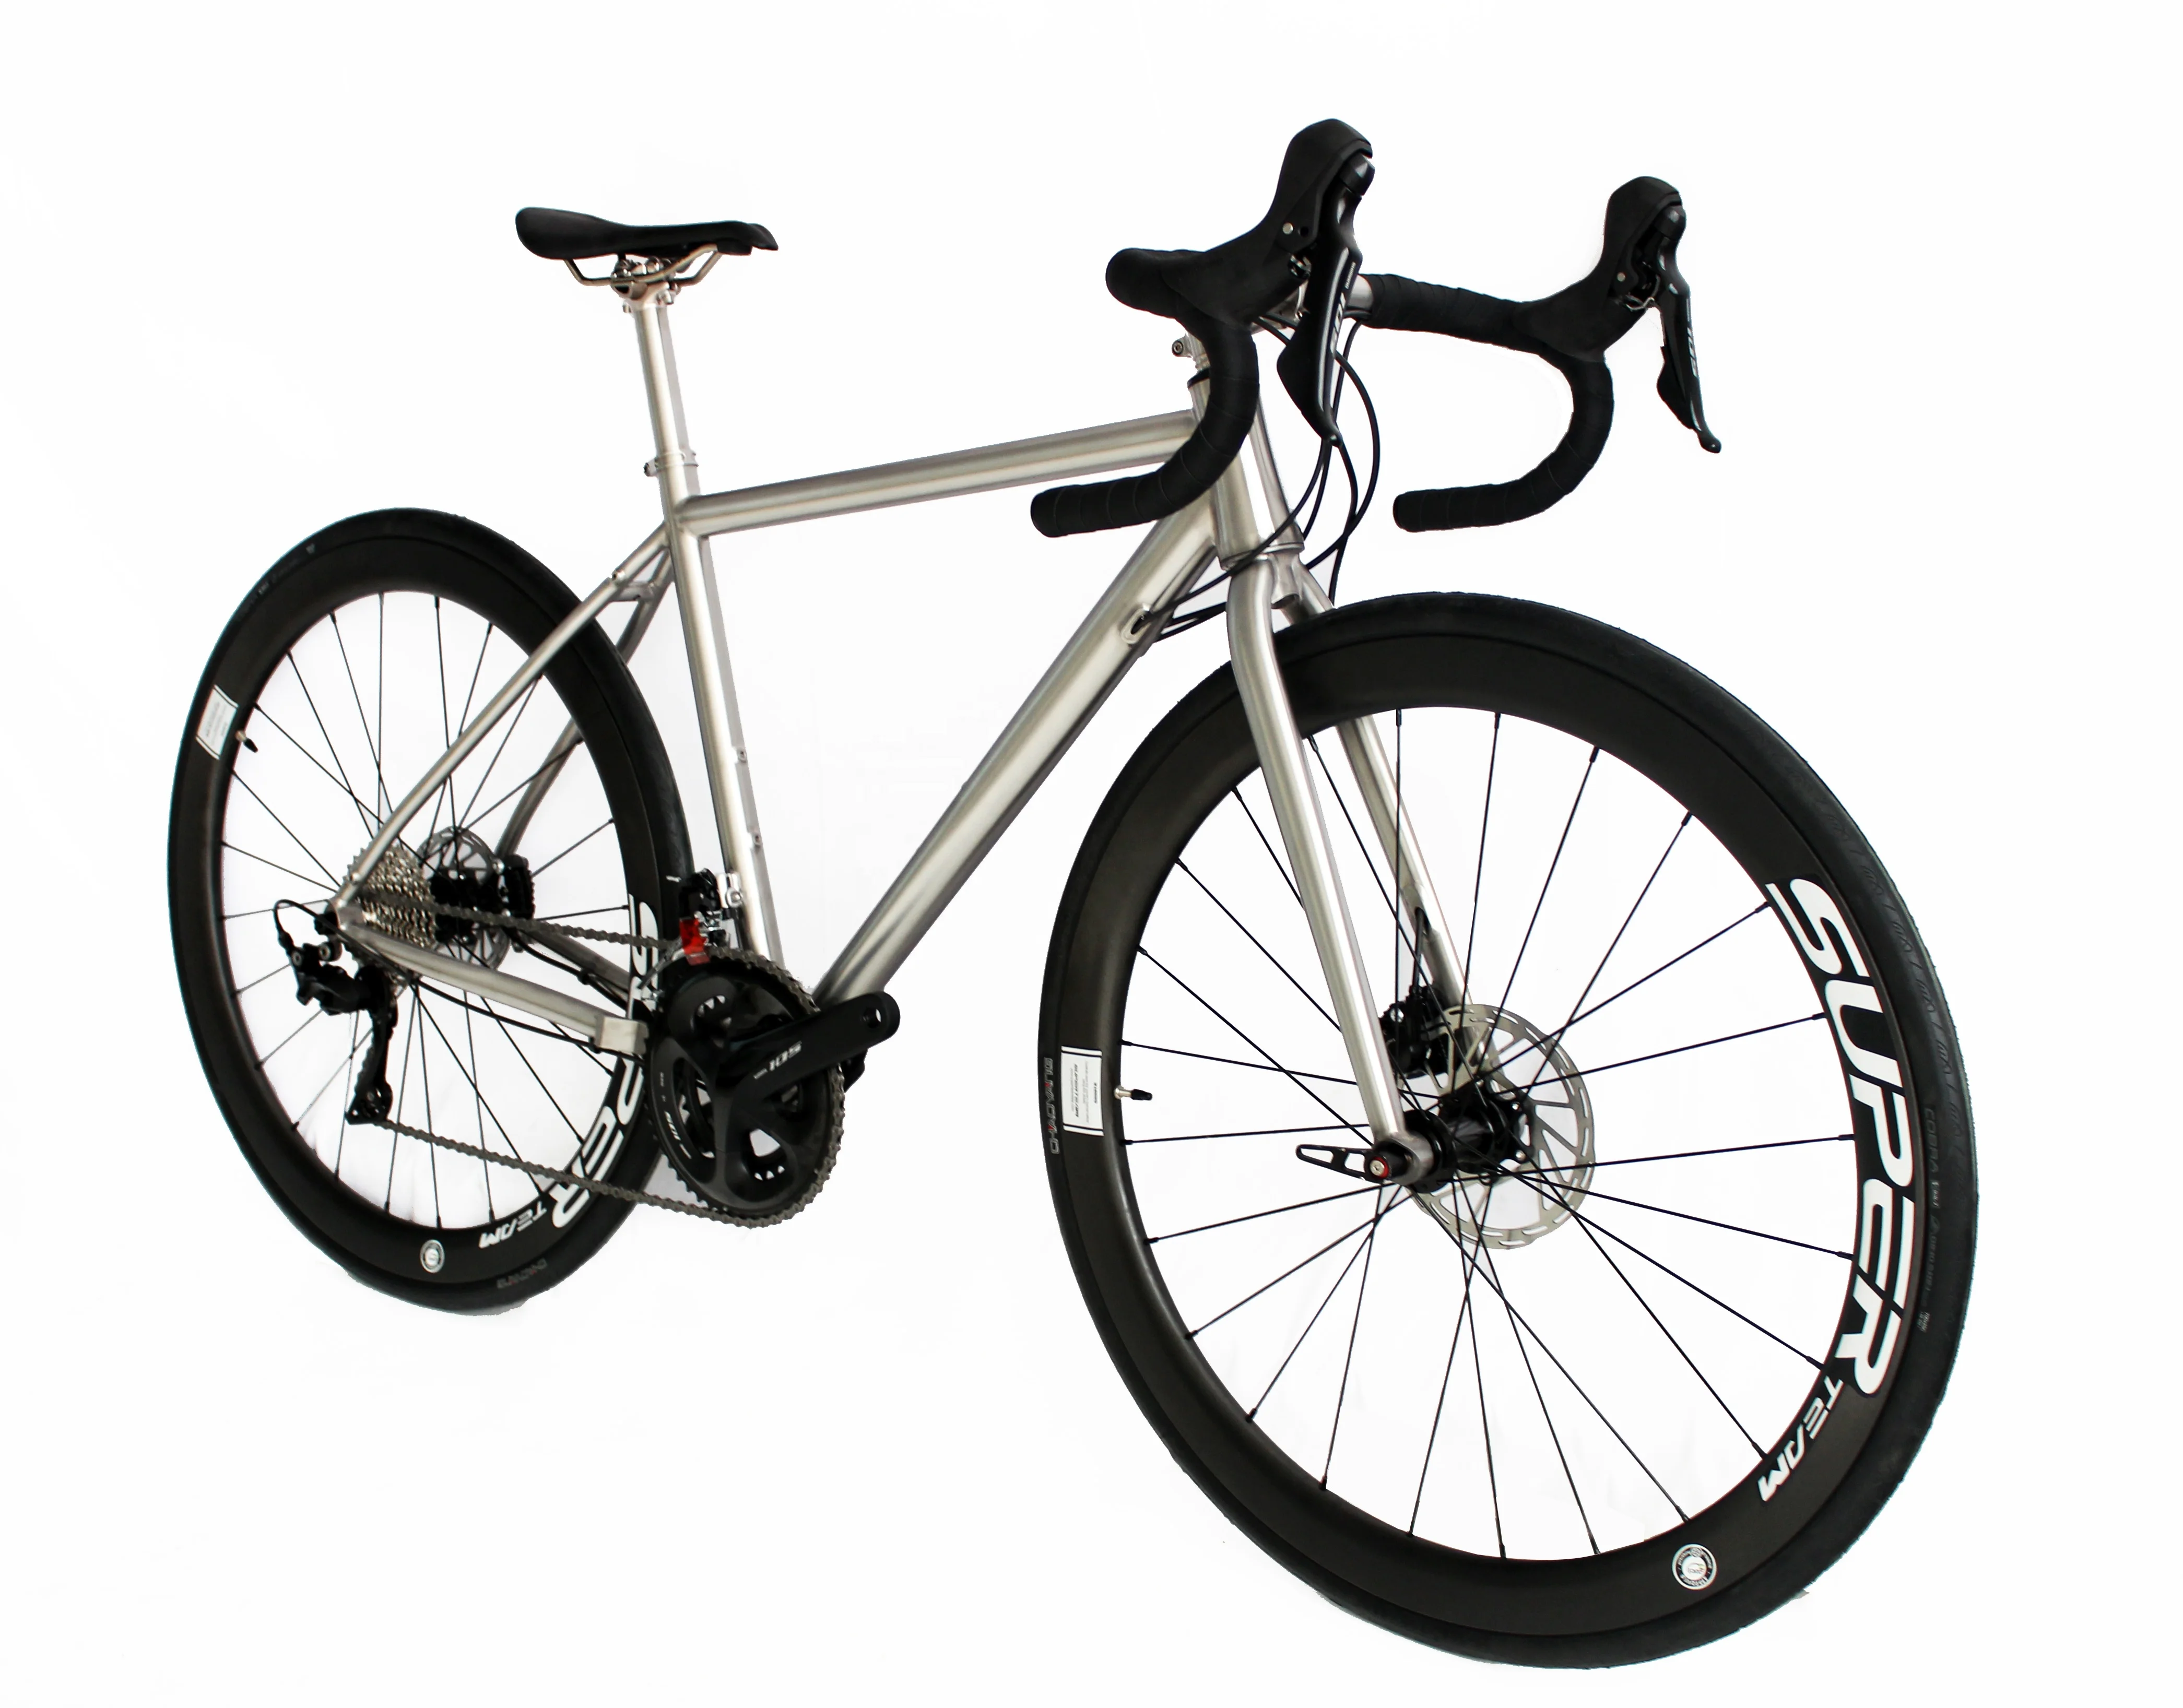 Titanium gravel road bike frame